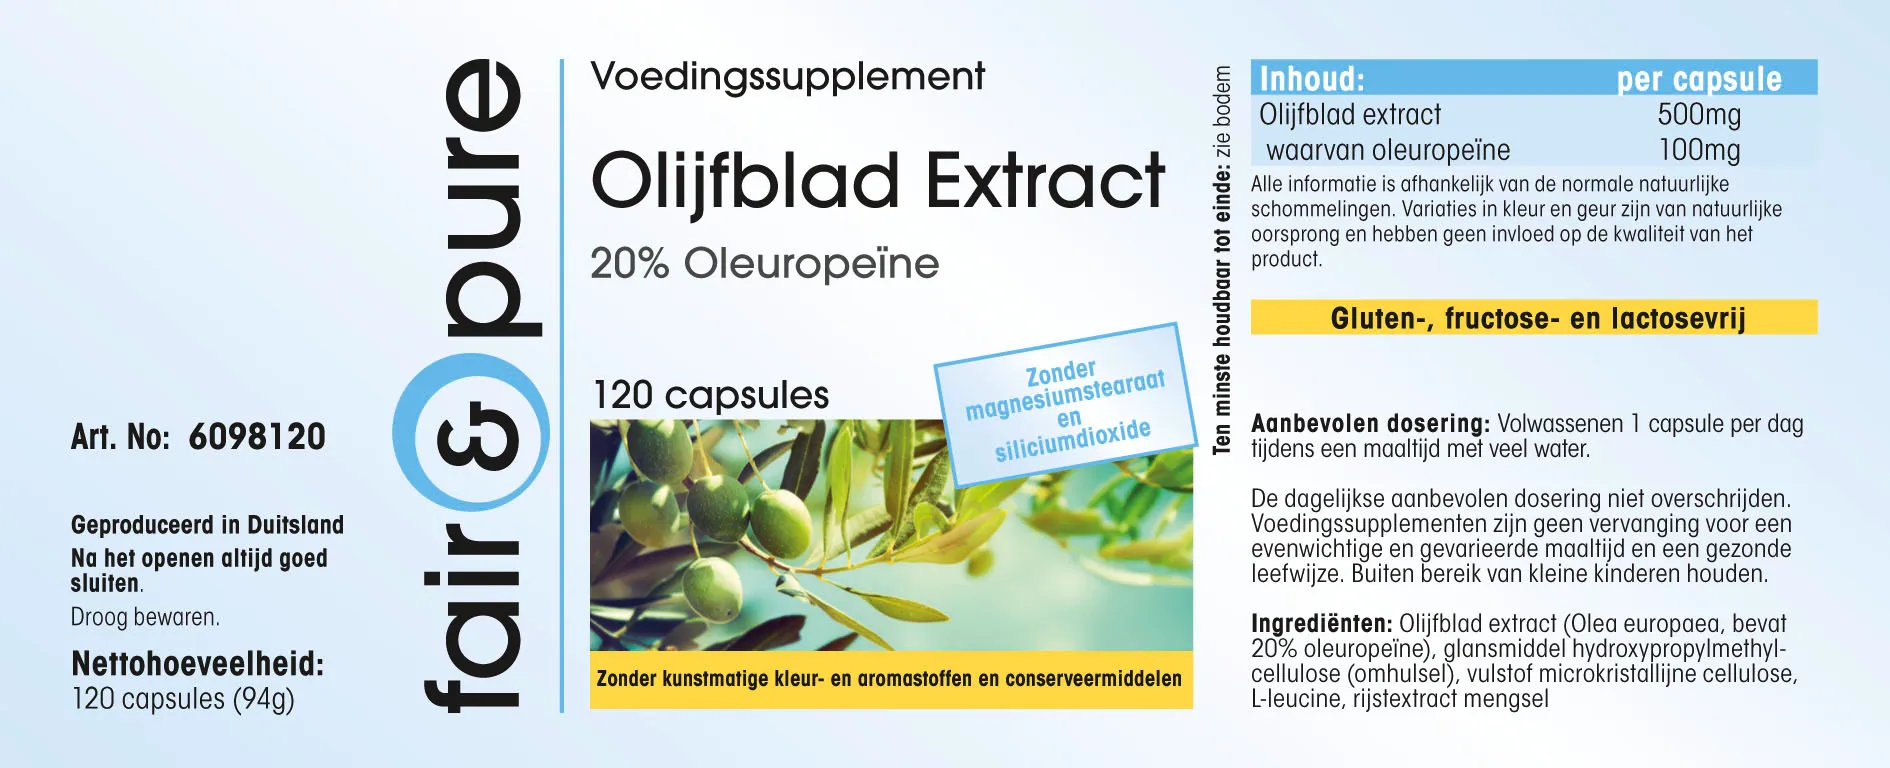 Olijfblad Extract 500mg